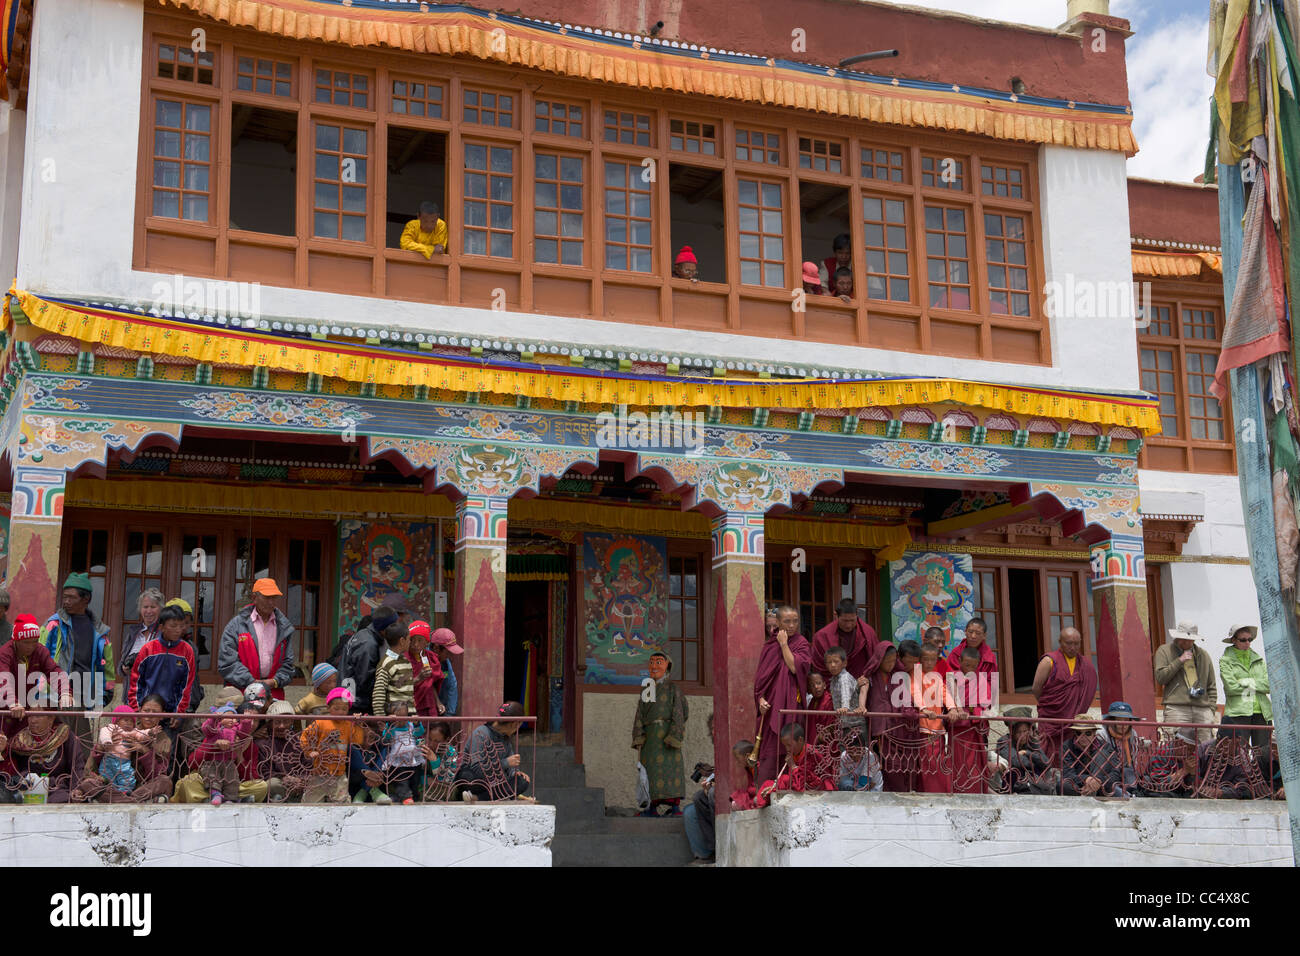 Monks and Chang-pa nomads watching the dancing at the Korzok Gompa, Korzok Gustor festival, Lake Tsomoriri, (Ladakh) Jammu & Kashmir, India Stock Photo